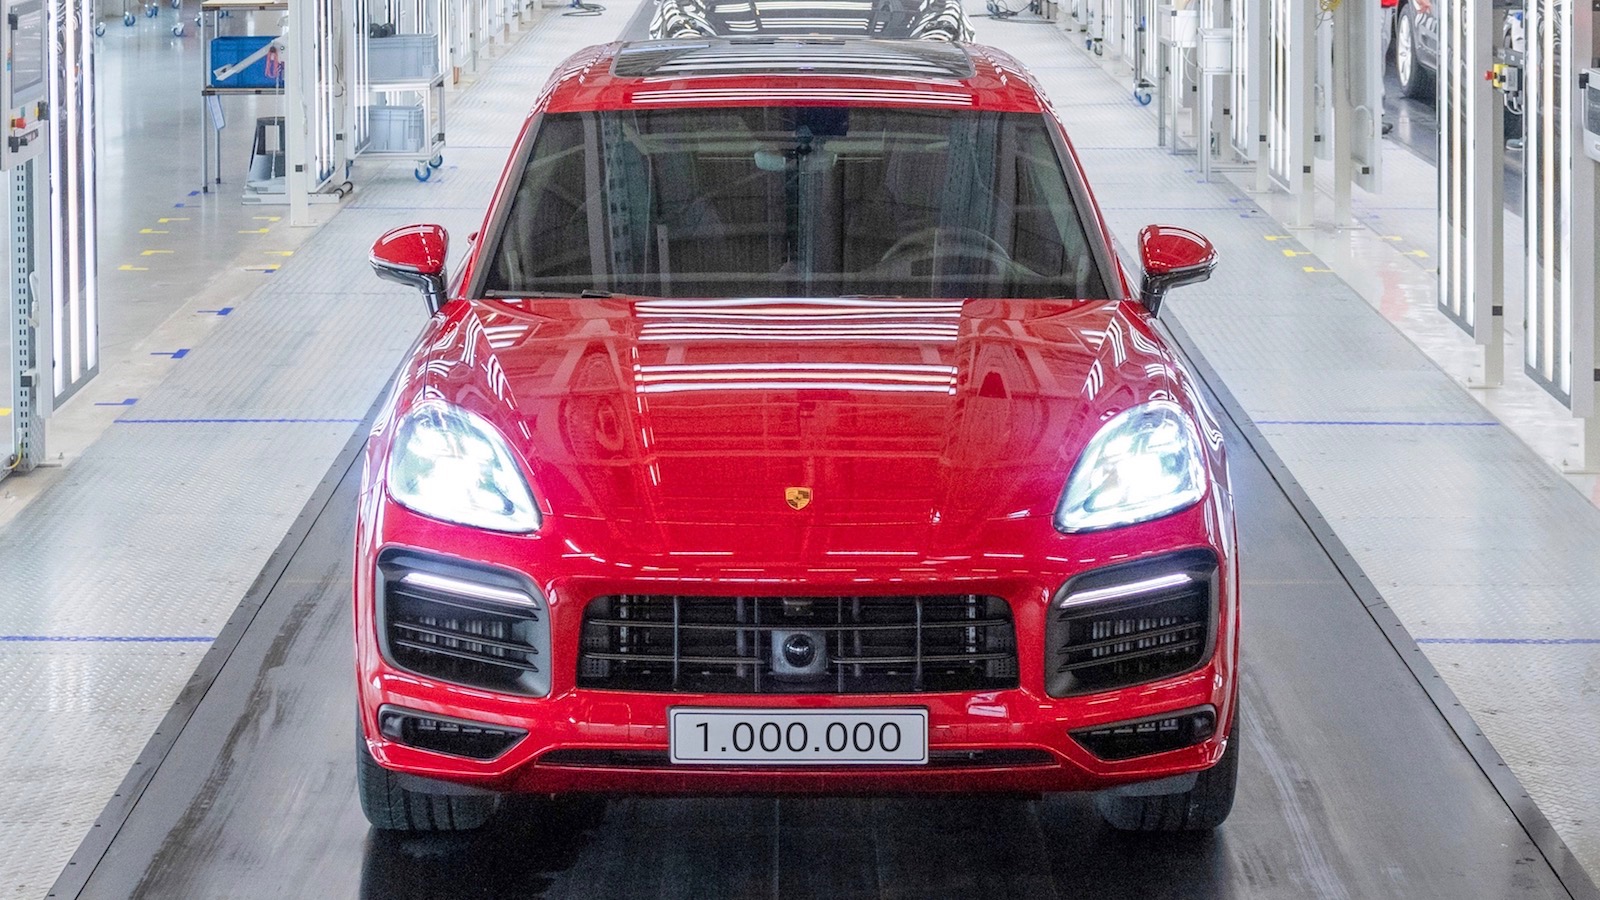 Porsche Cayenne hits 1,000,000 production milestone